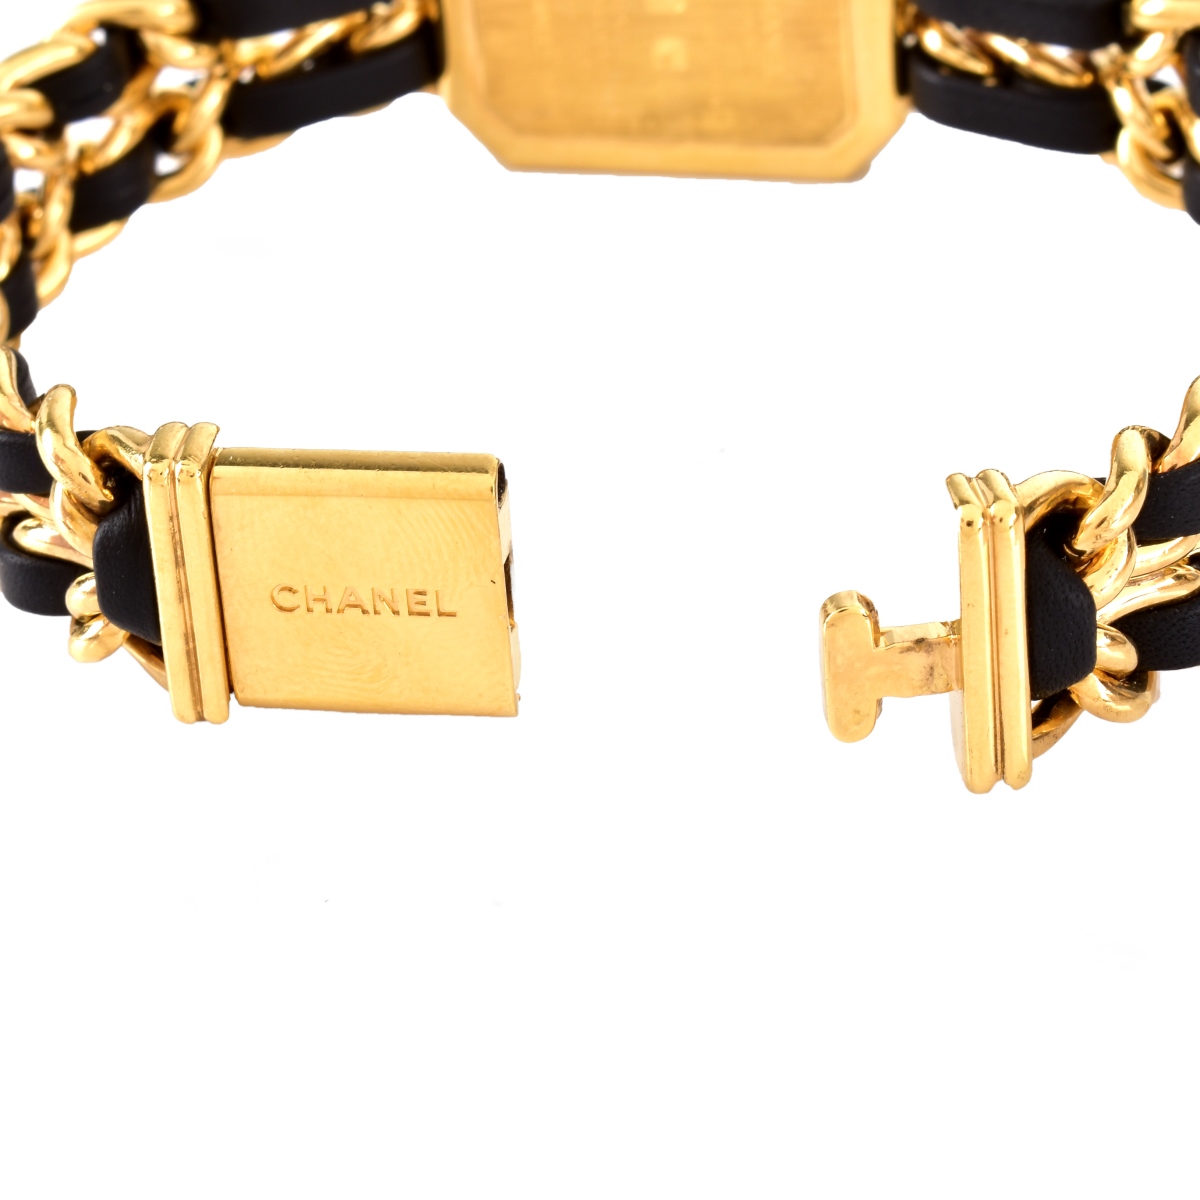 Chanel Premiere XL Watch